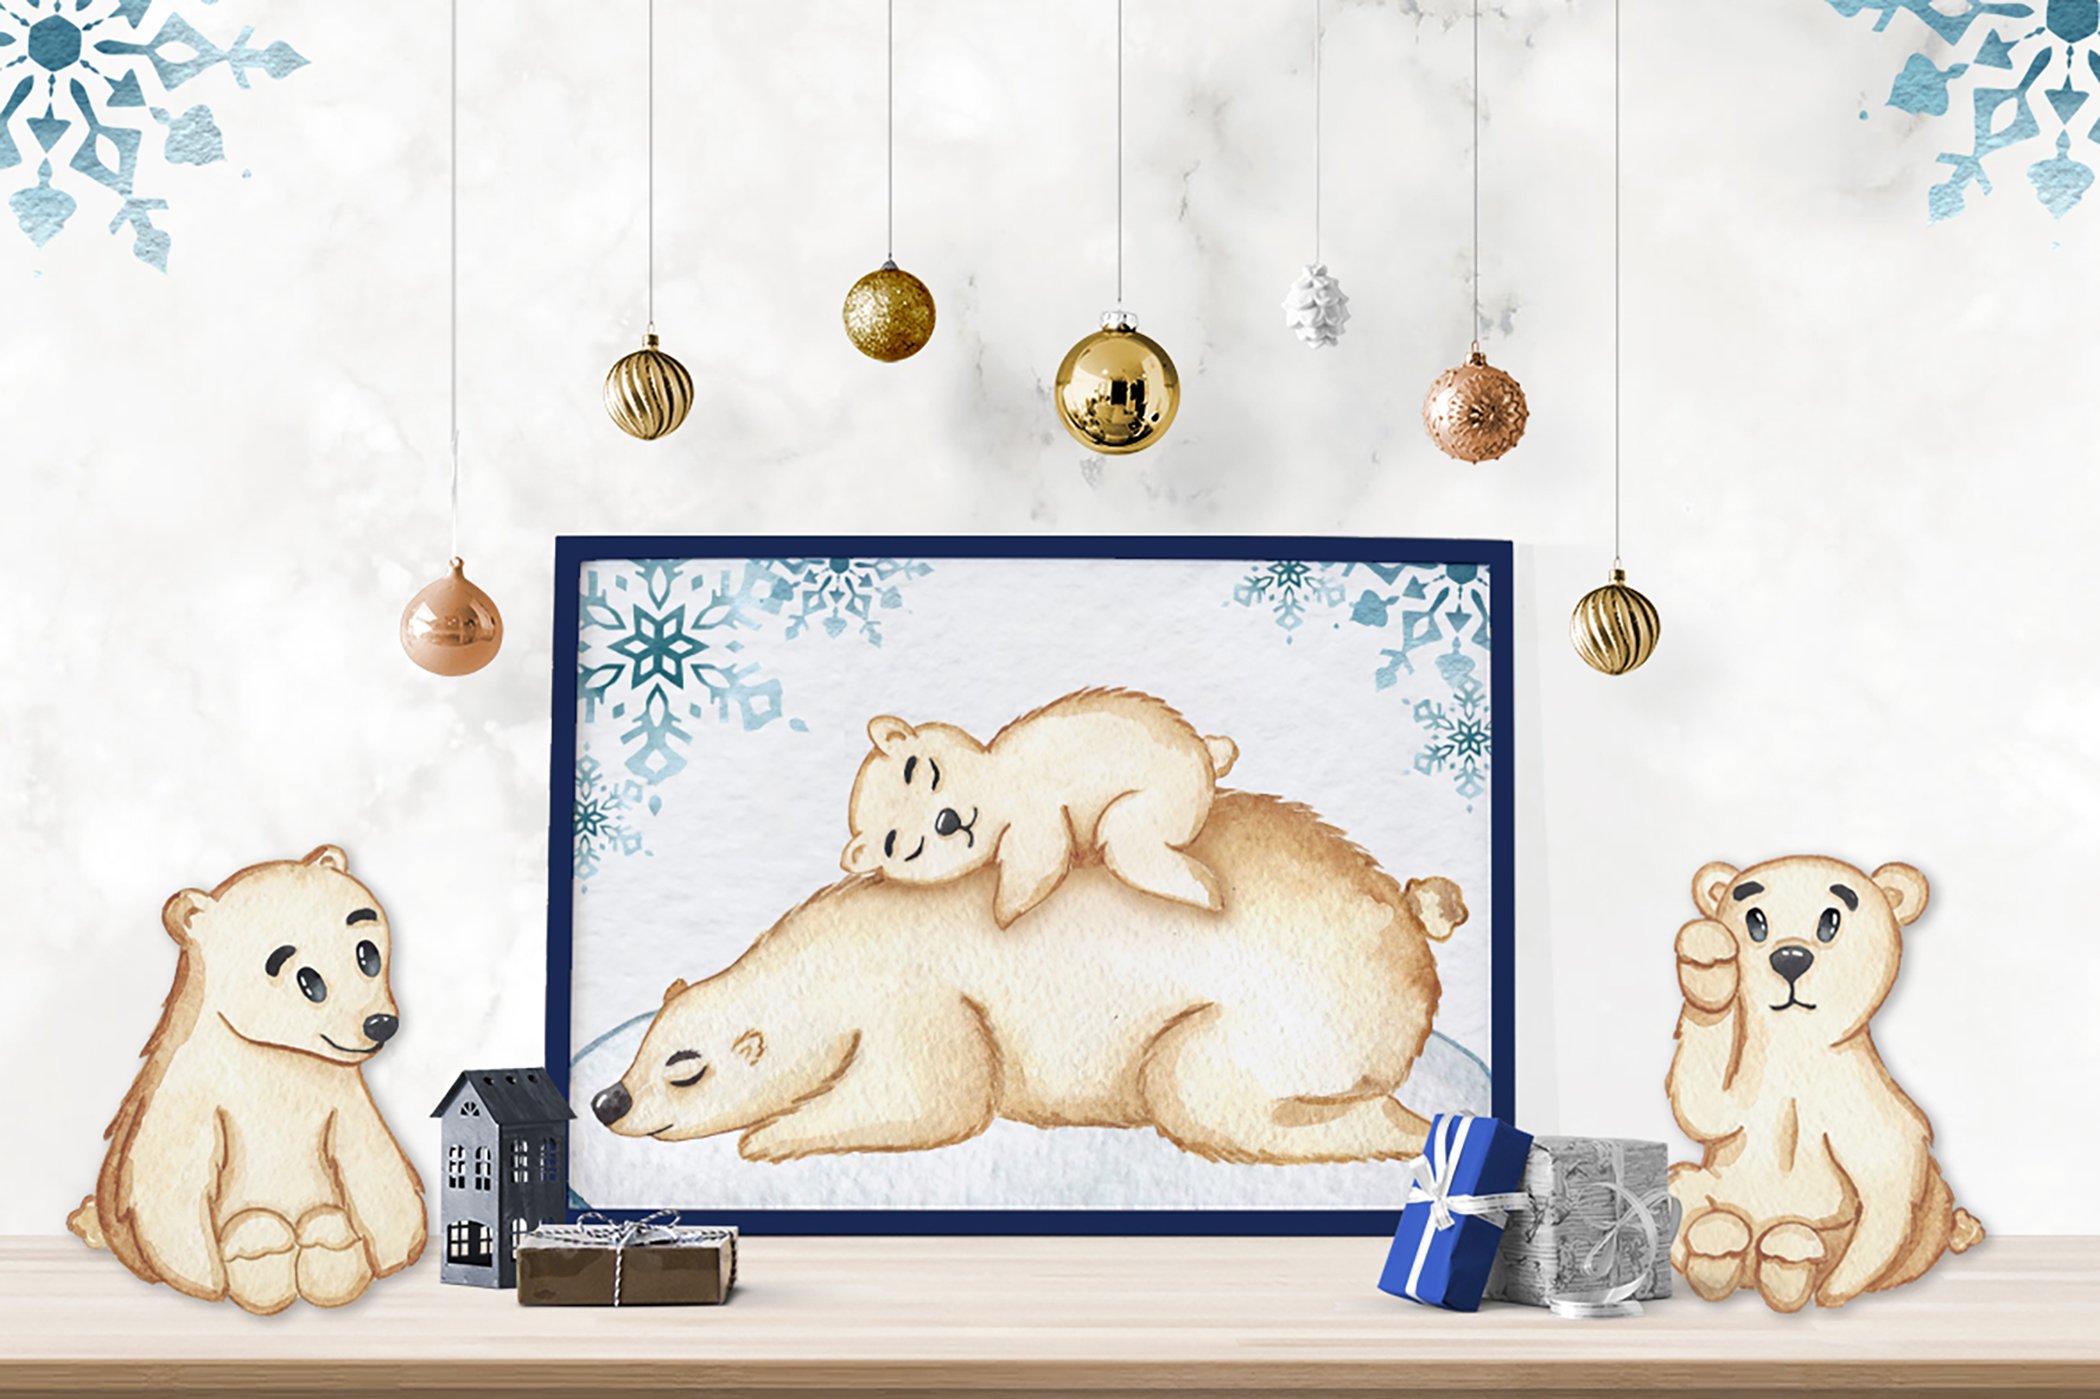 Full composition for winter illustration with white polar bears.